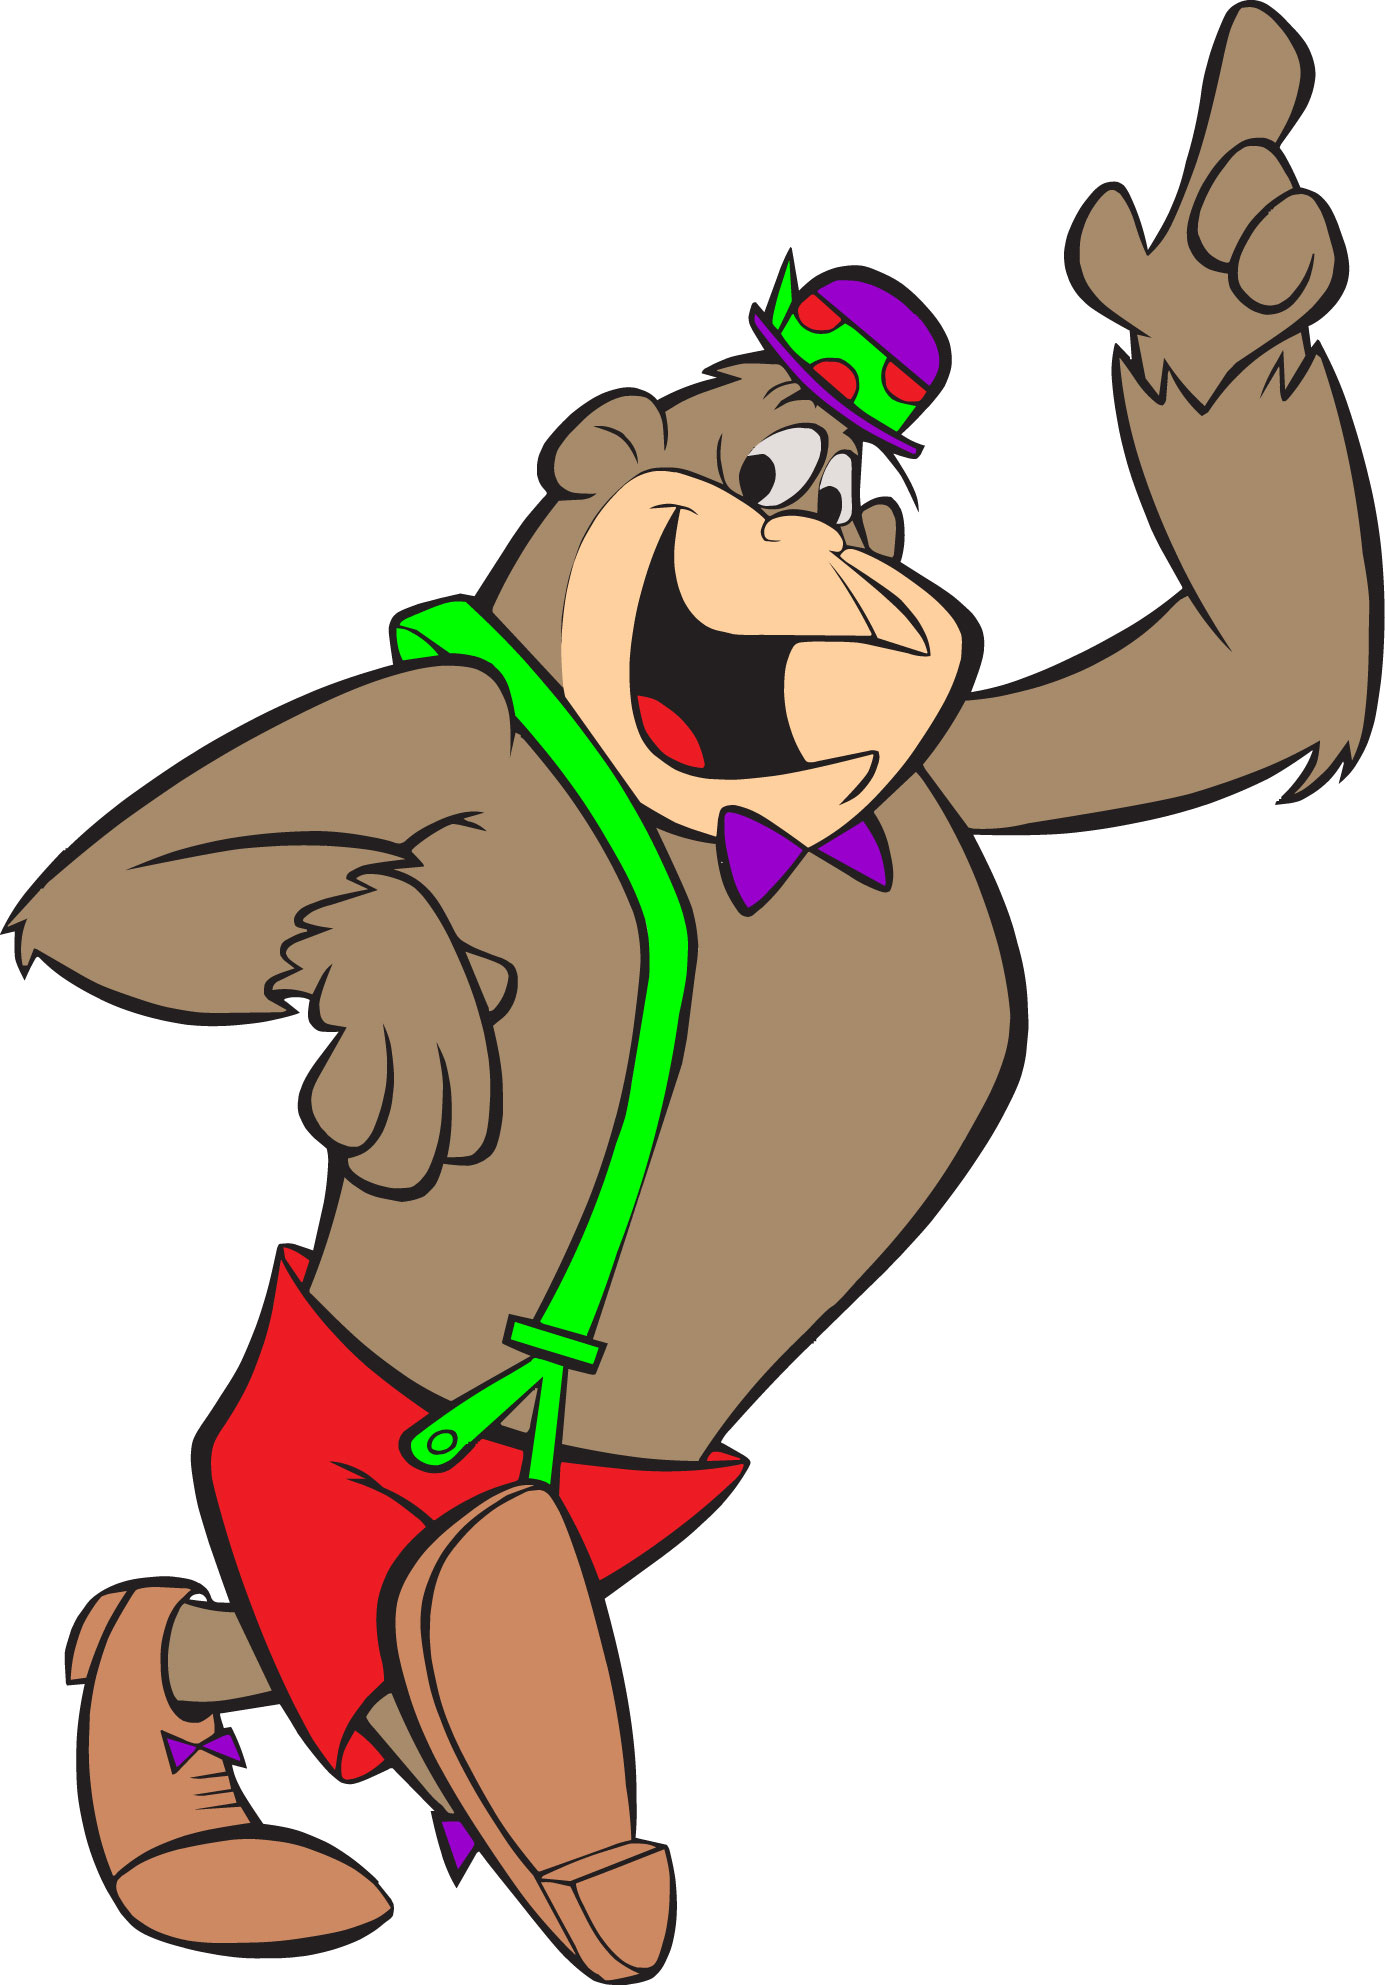 Cartoon Pictures Of Gorillas | Free Download Clip Art | Free Clip ...